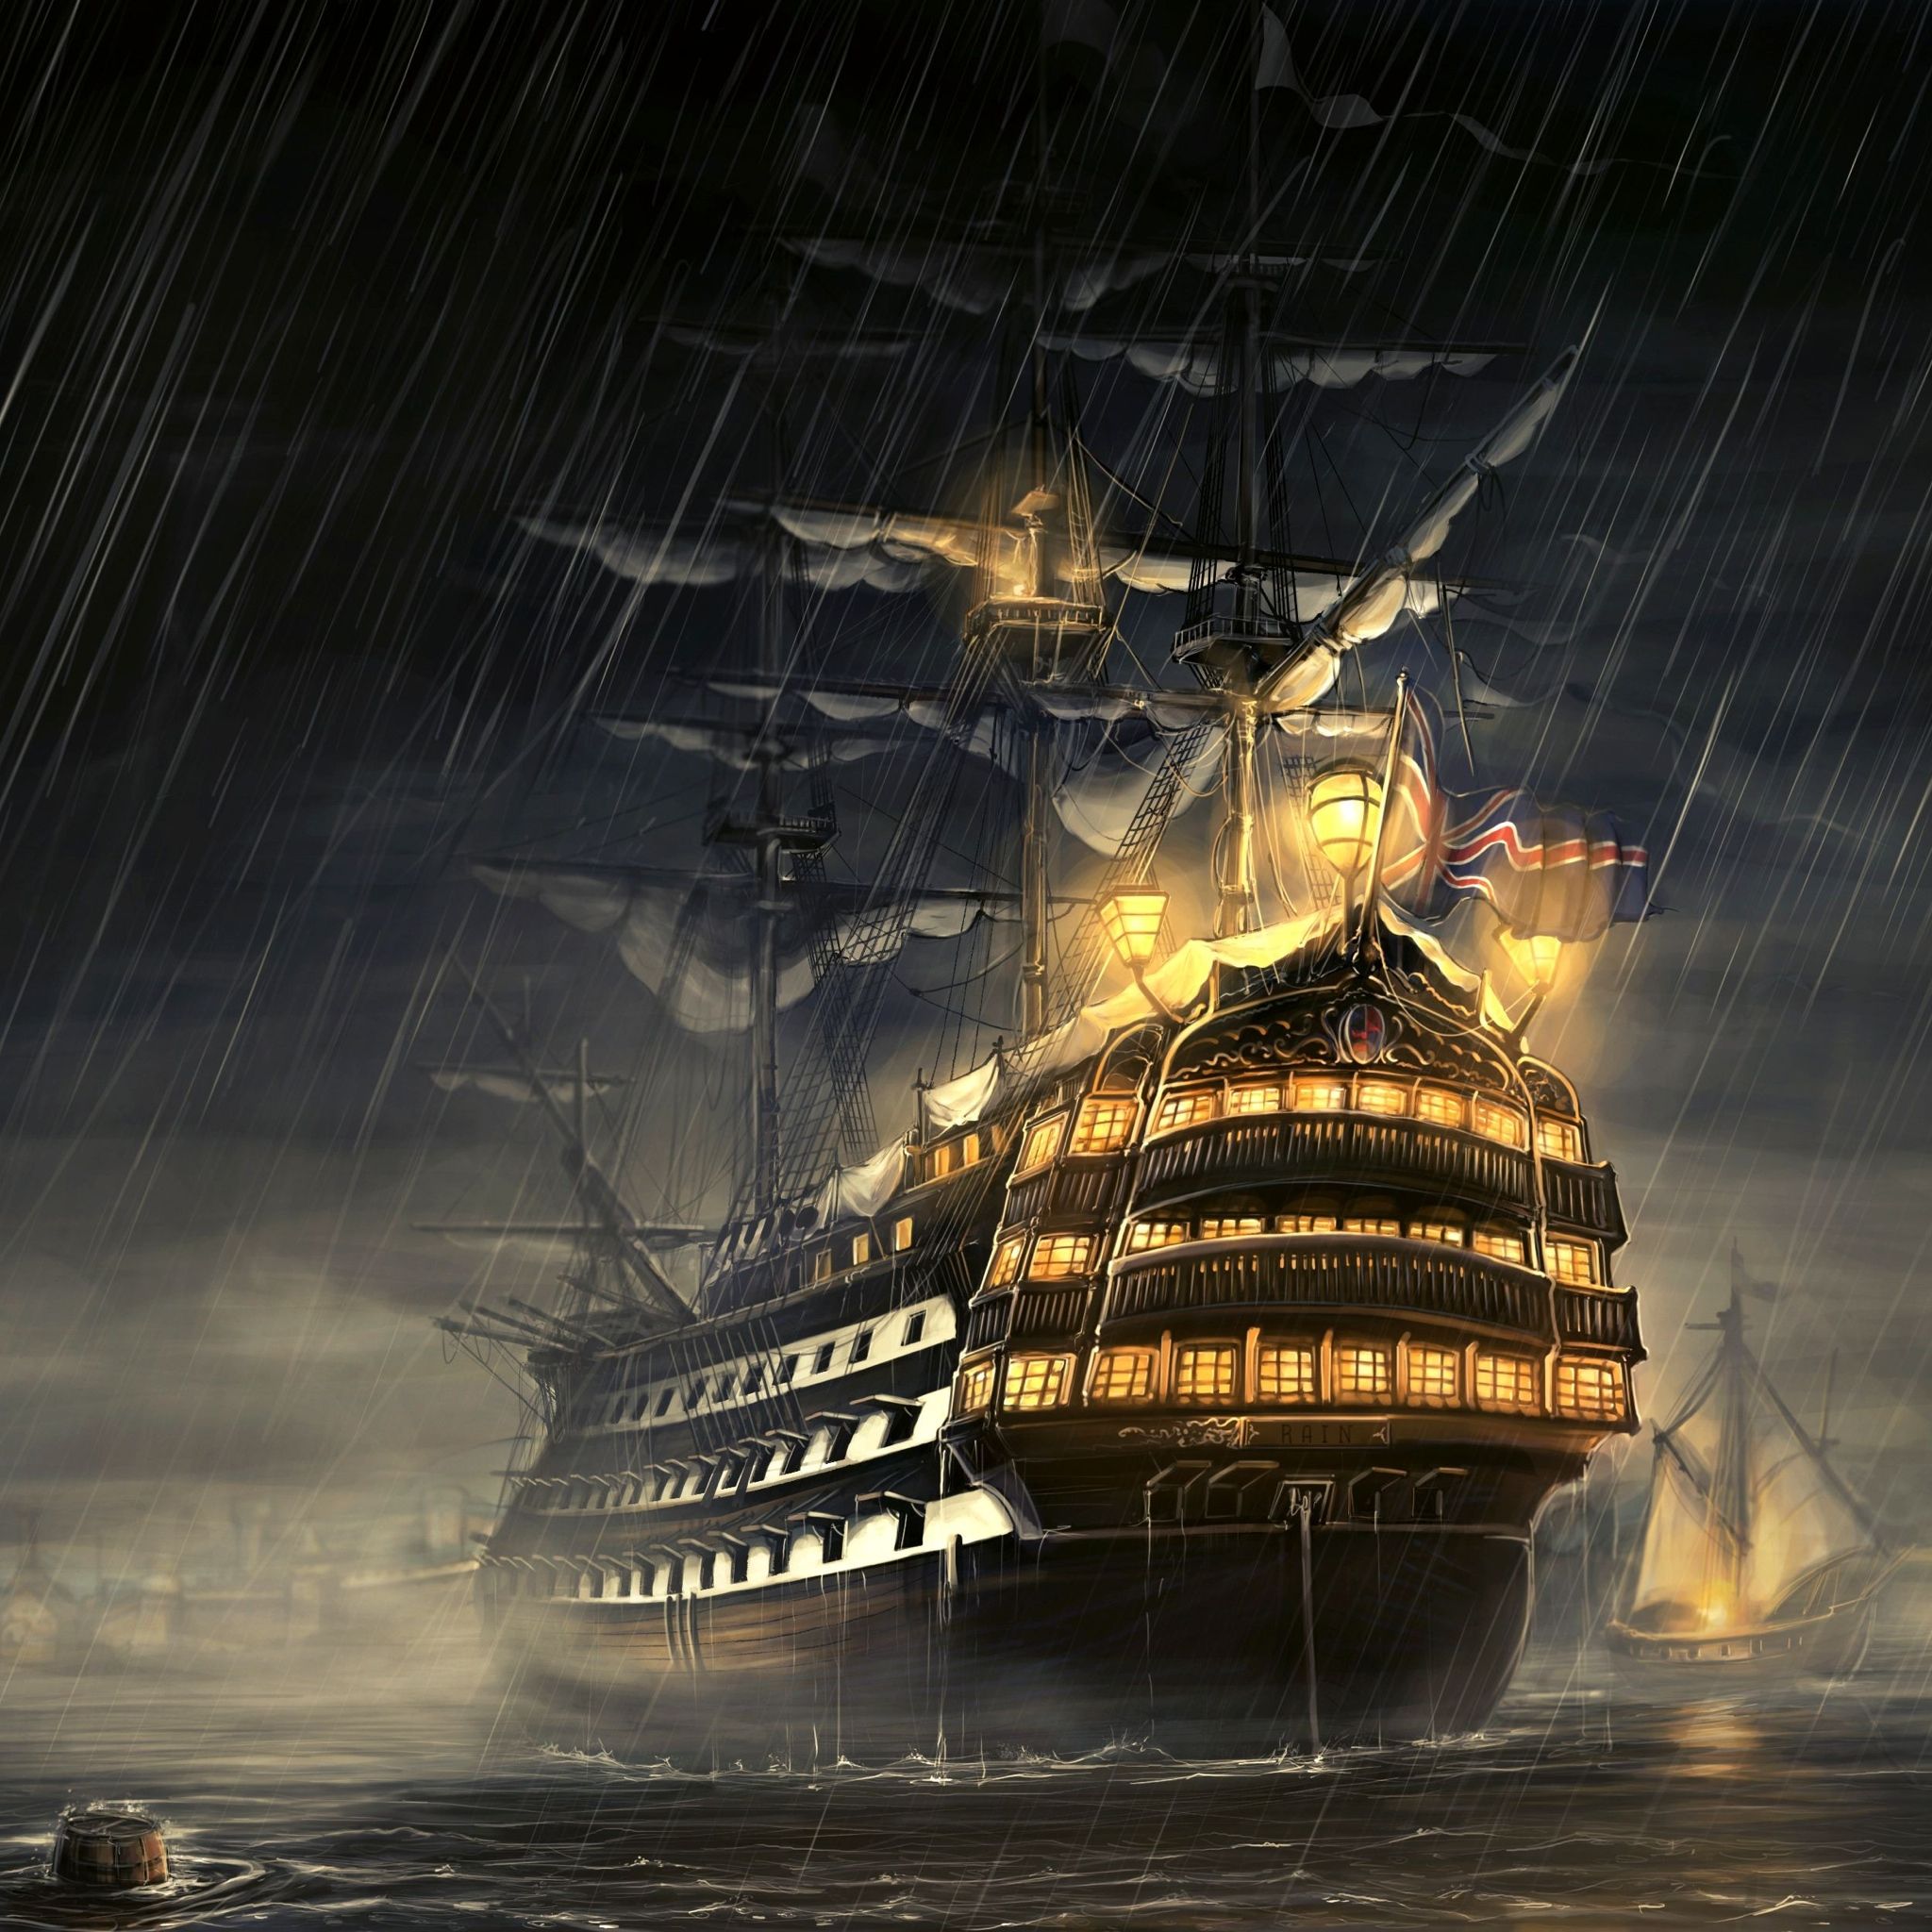 pirate ship - Google Search | Pirates | Pinterest | Pirate ships ...